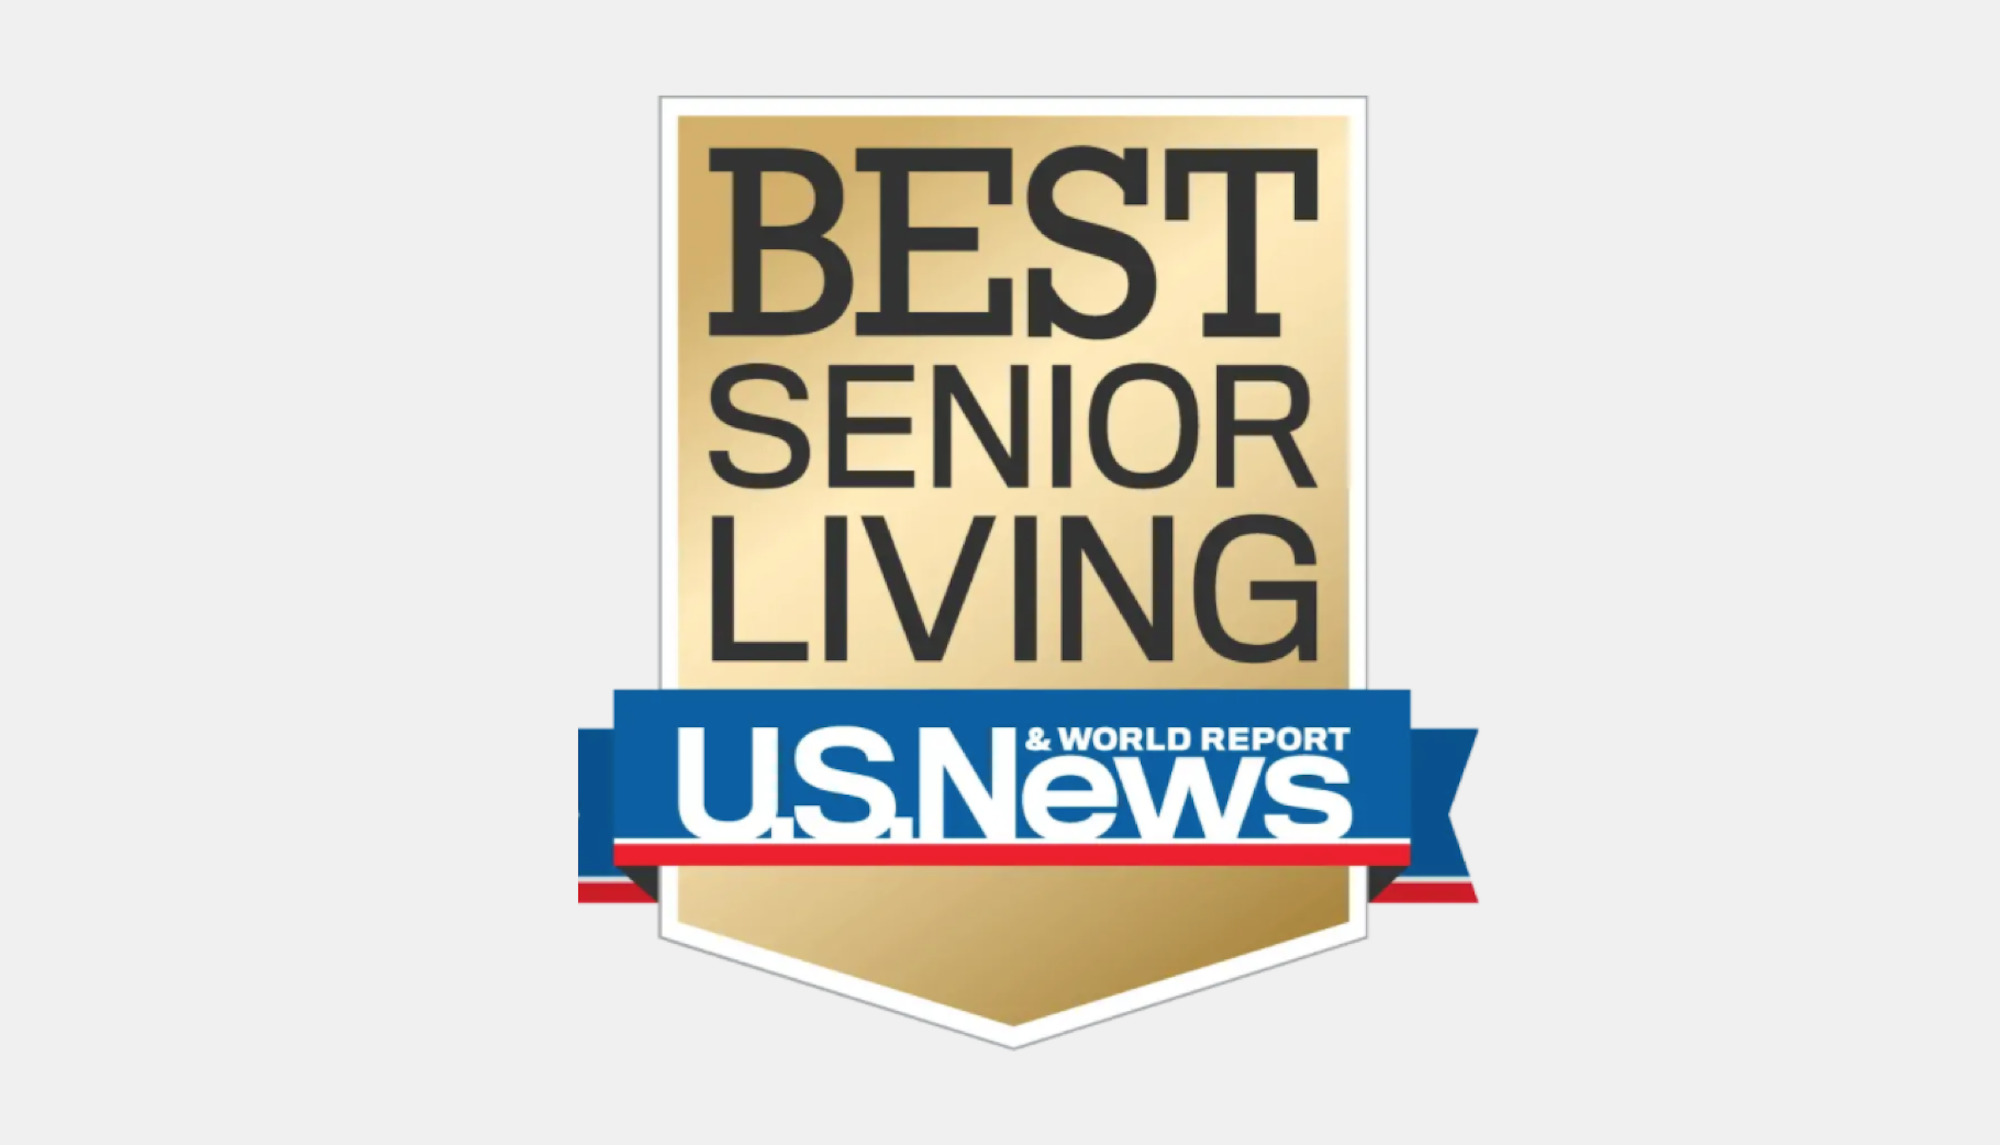 U.S. News launches 'Best Senior Living' program - News ...